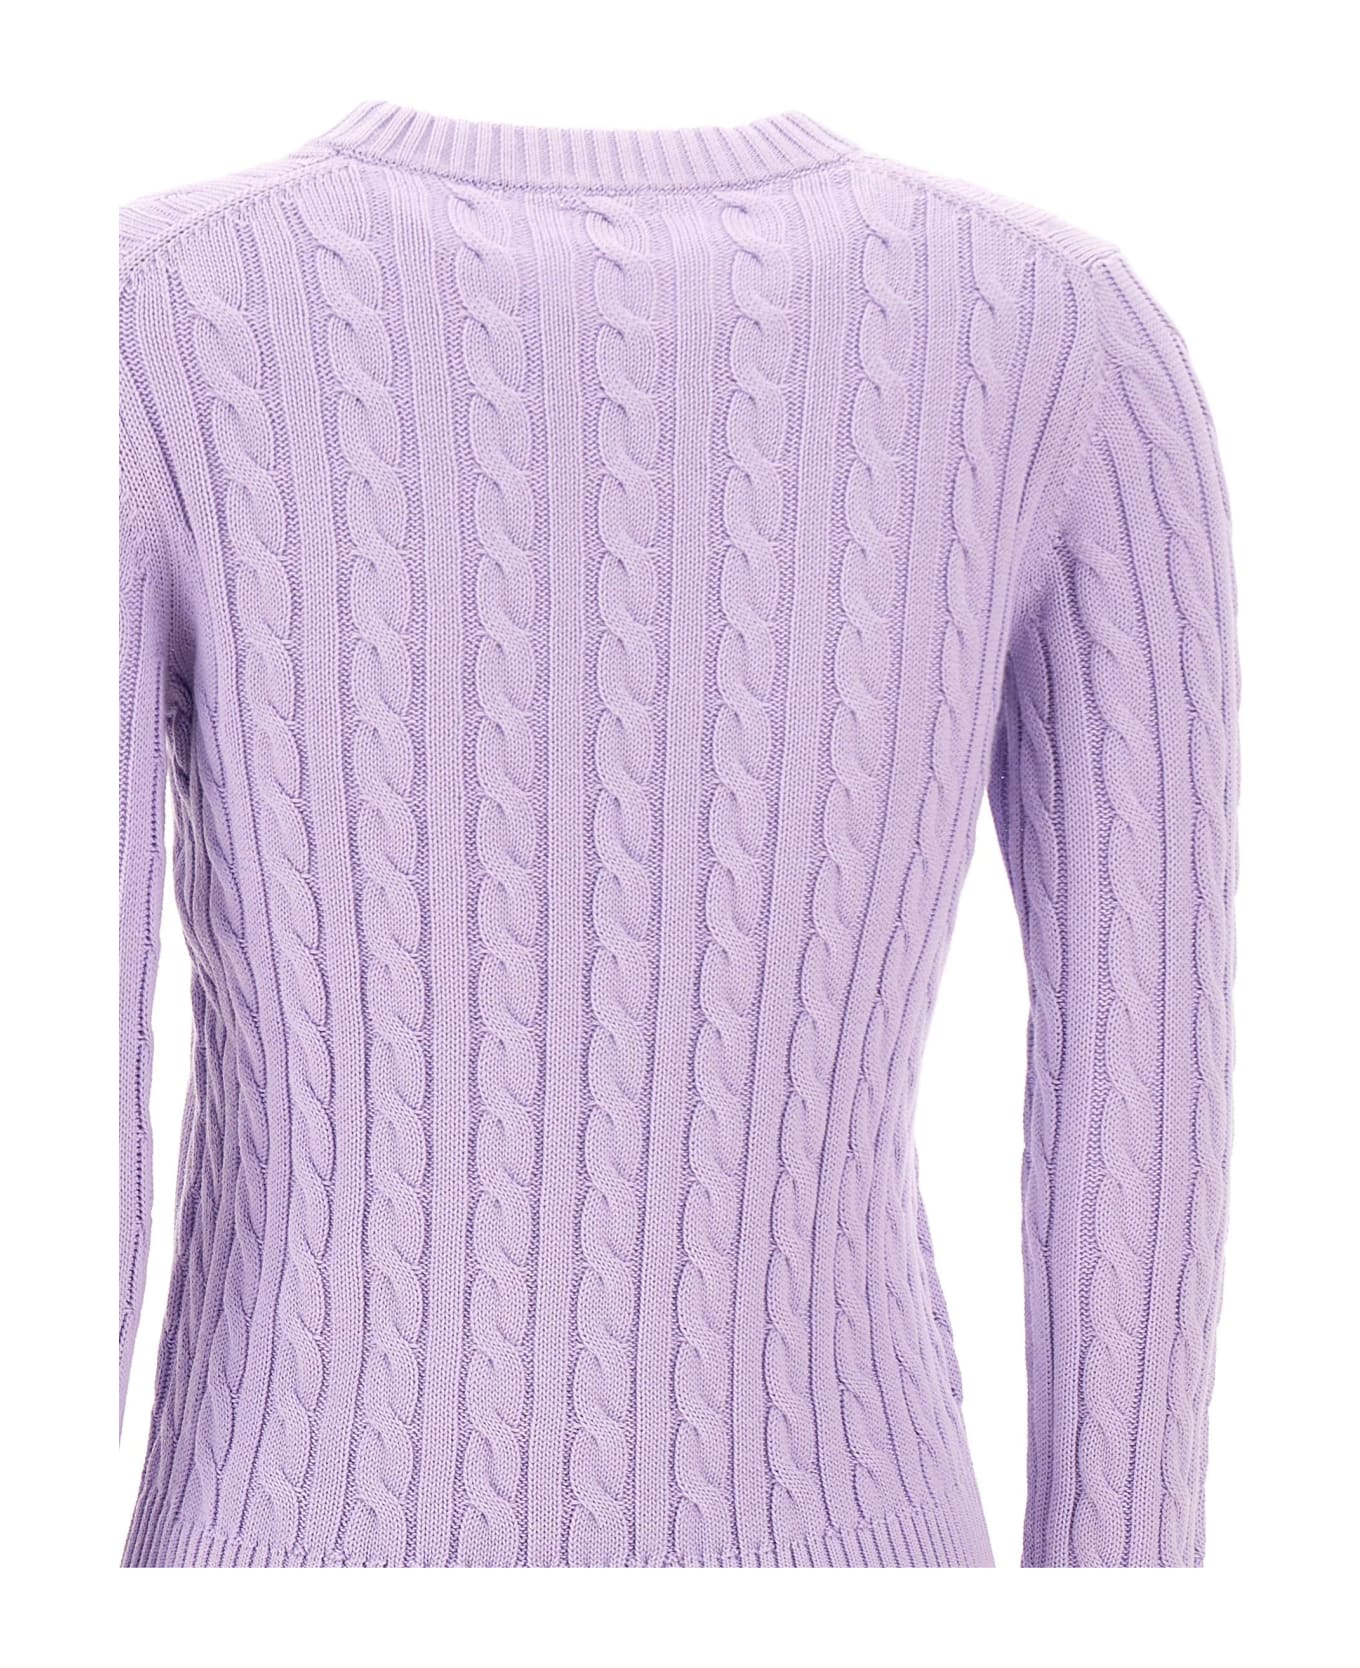 Sun 68 'round Neck Cable' Sweater Cotton